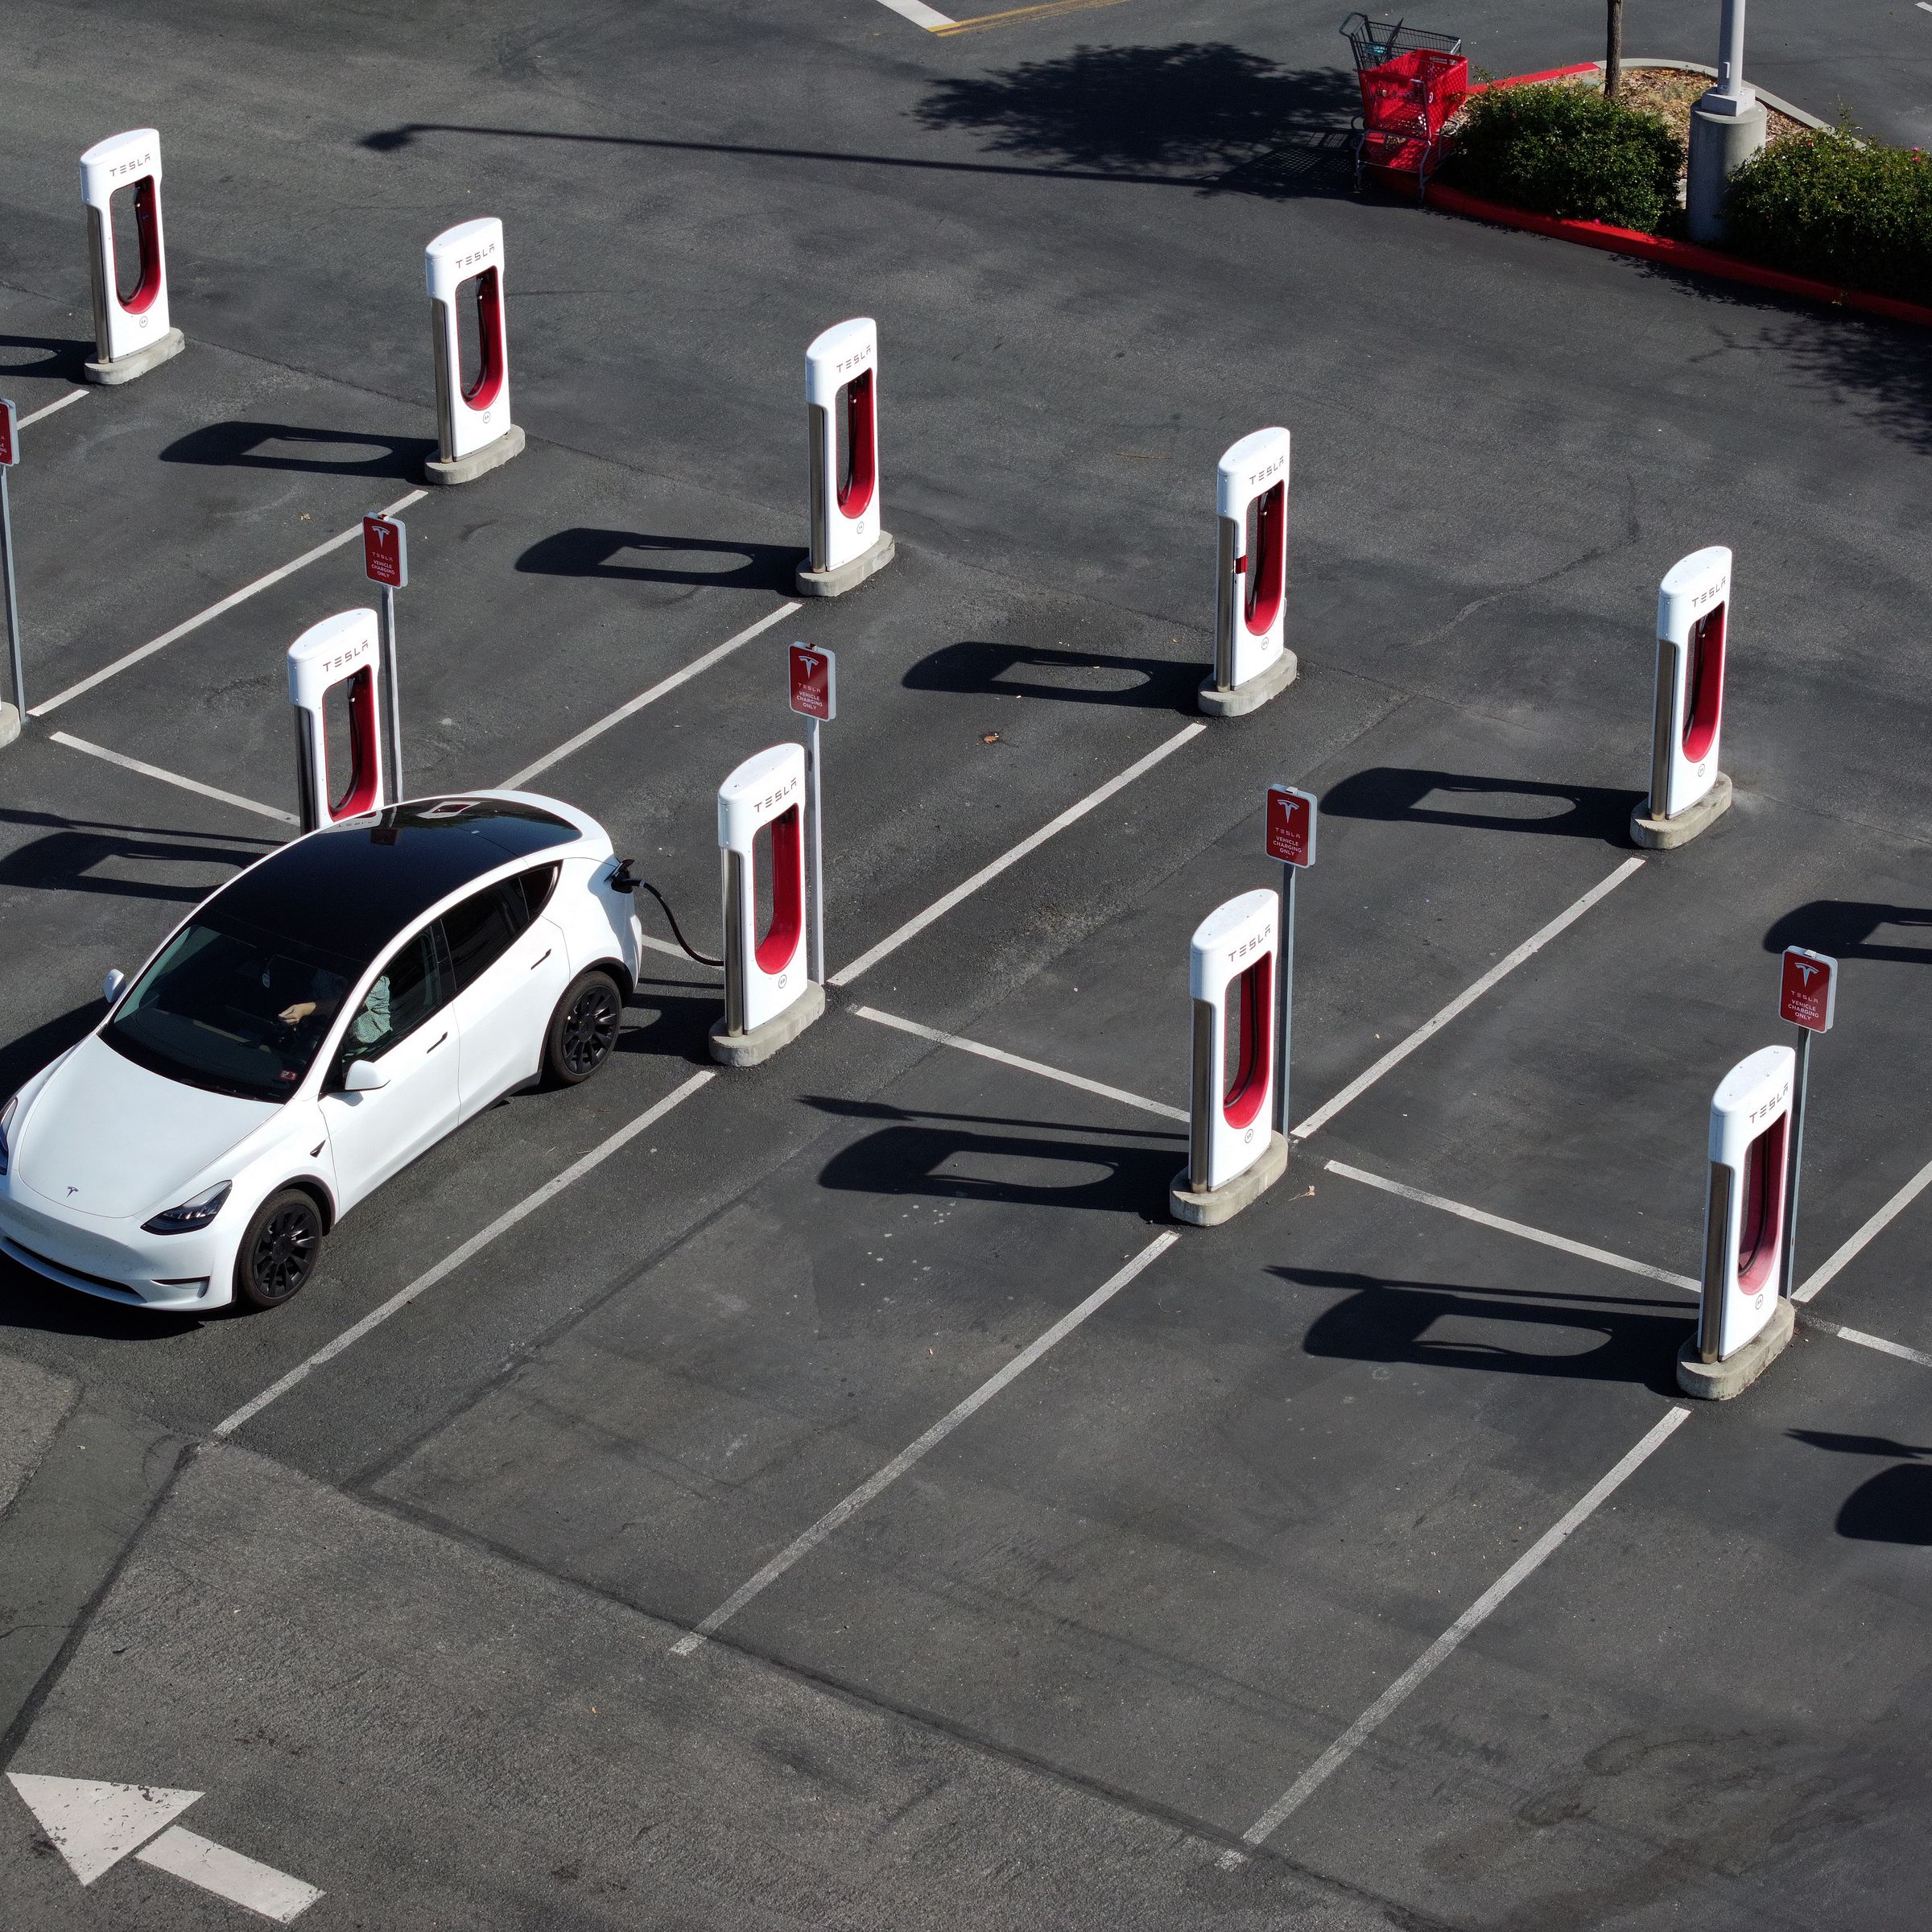 Tesla vehicle at a Supercharger station.